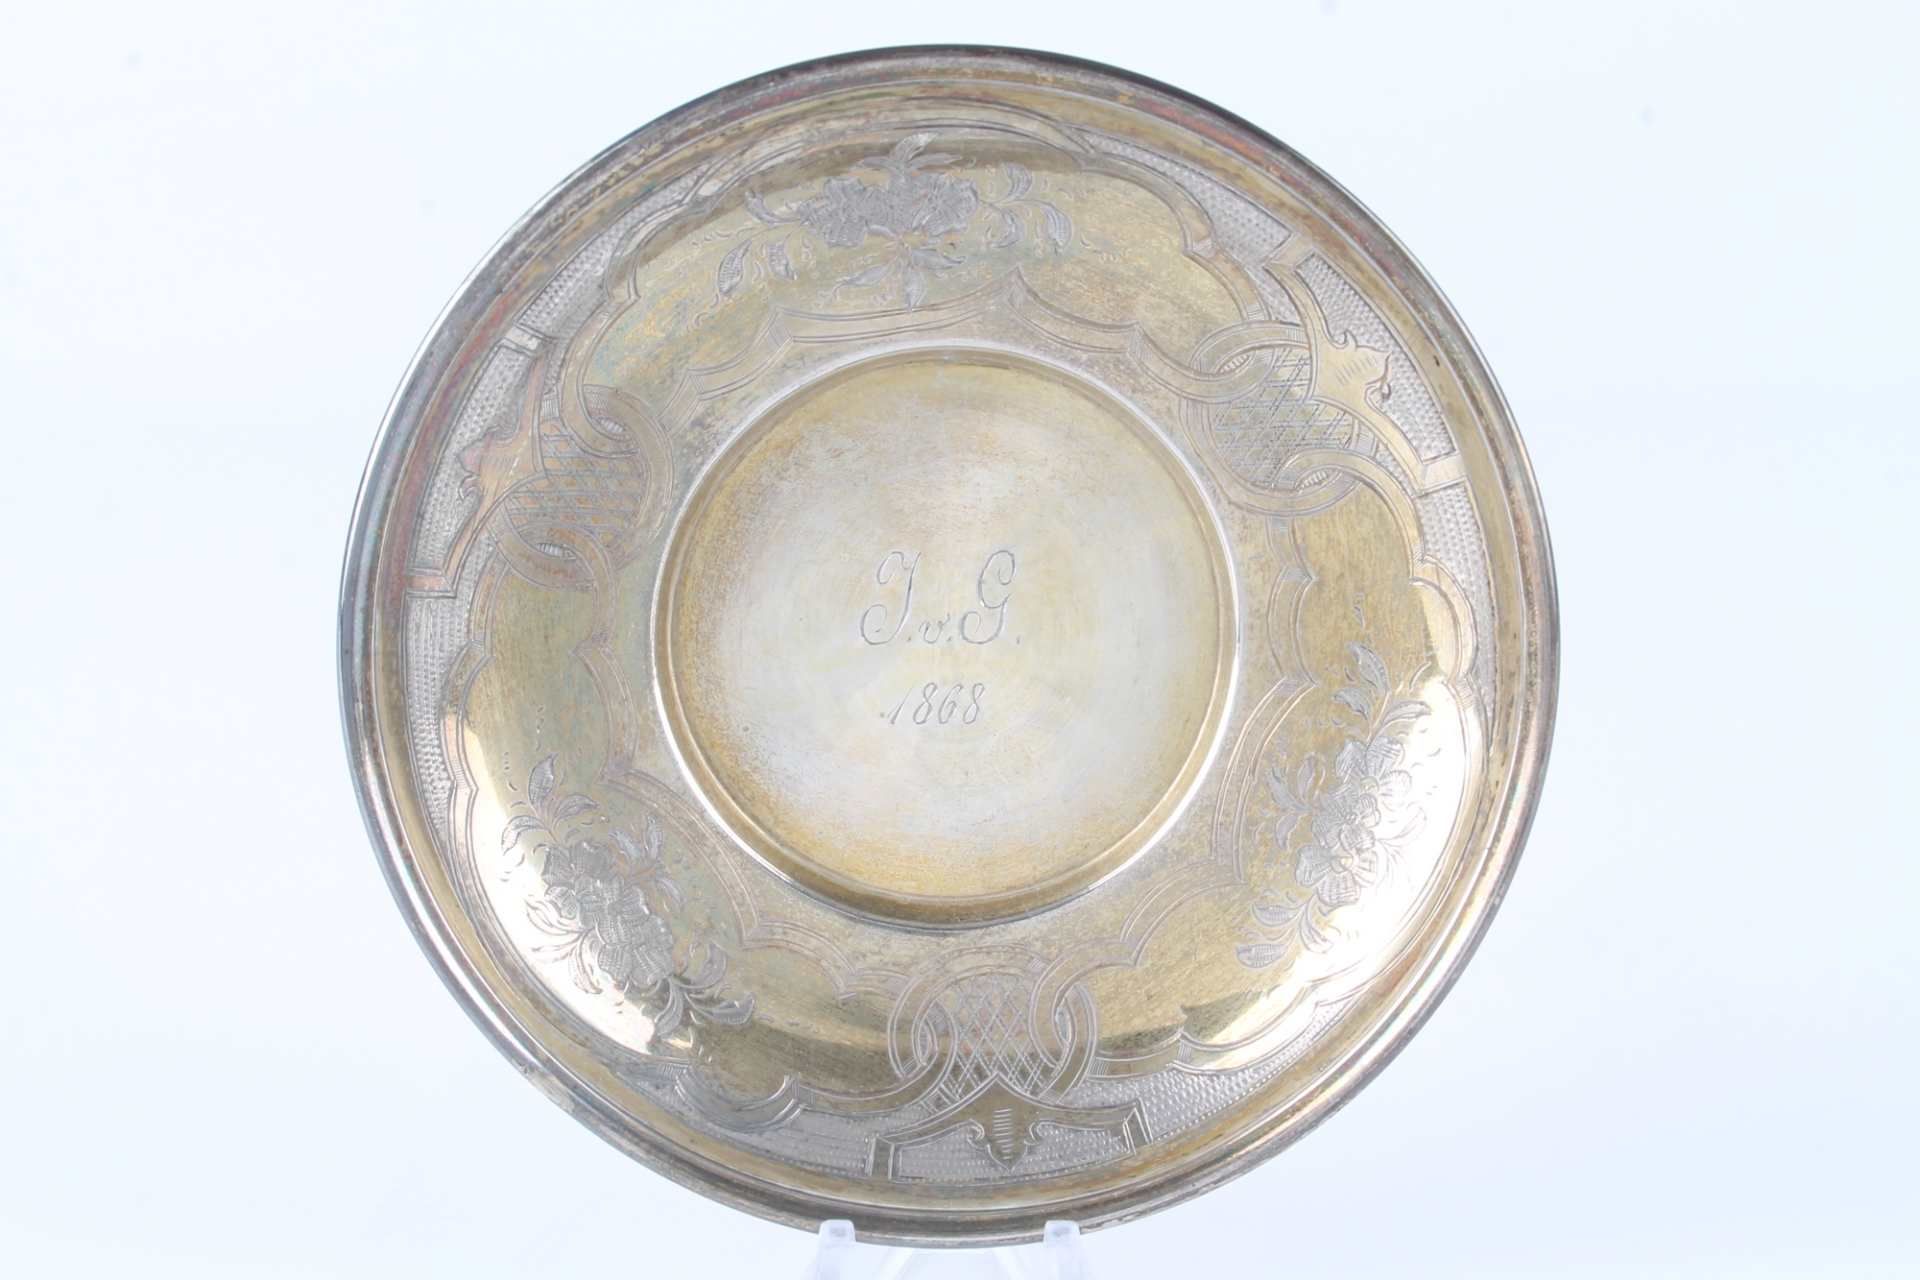 Russland Silber Kaffeetasse 19. Jahrhundert, russian silver coffee cup 19th century, - Image 4 of 9